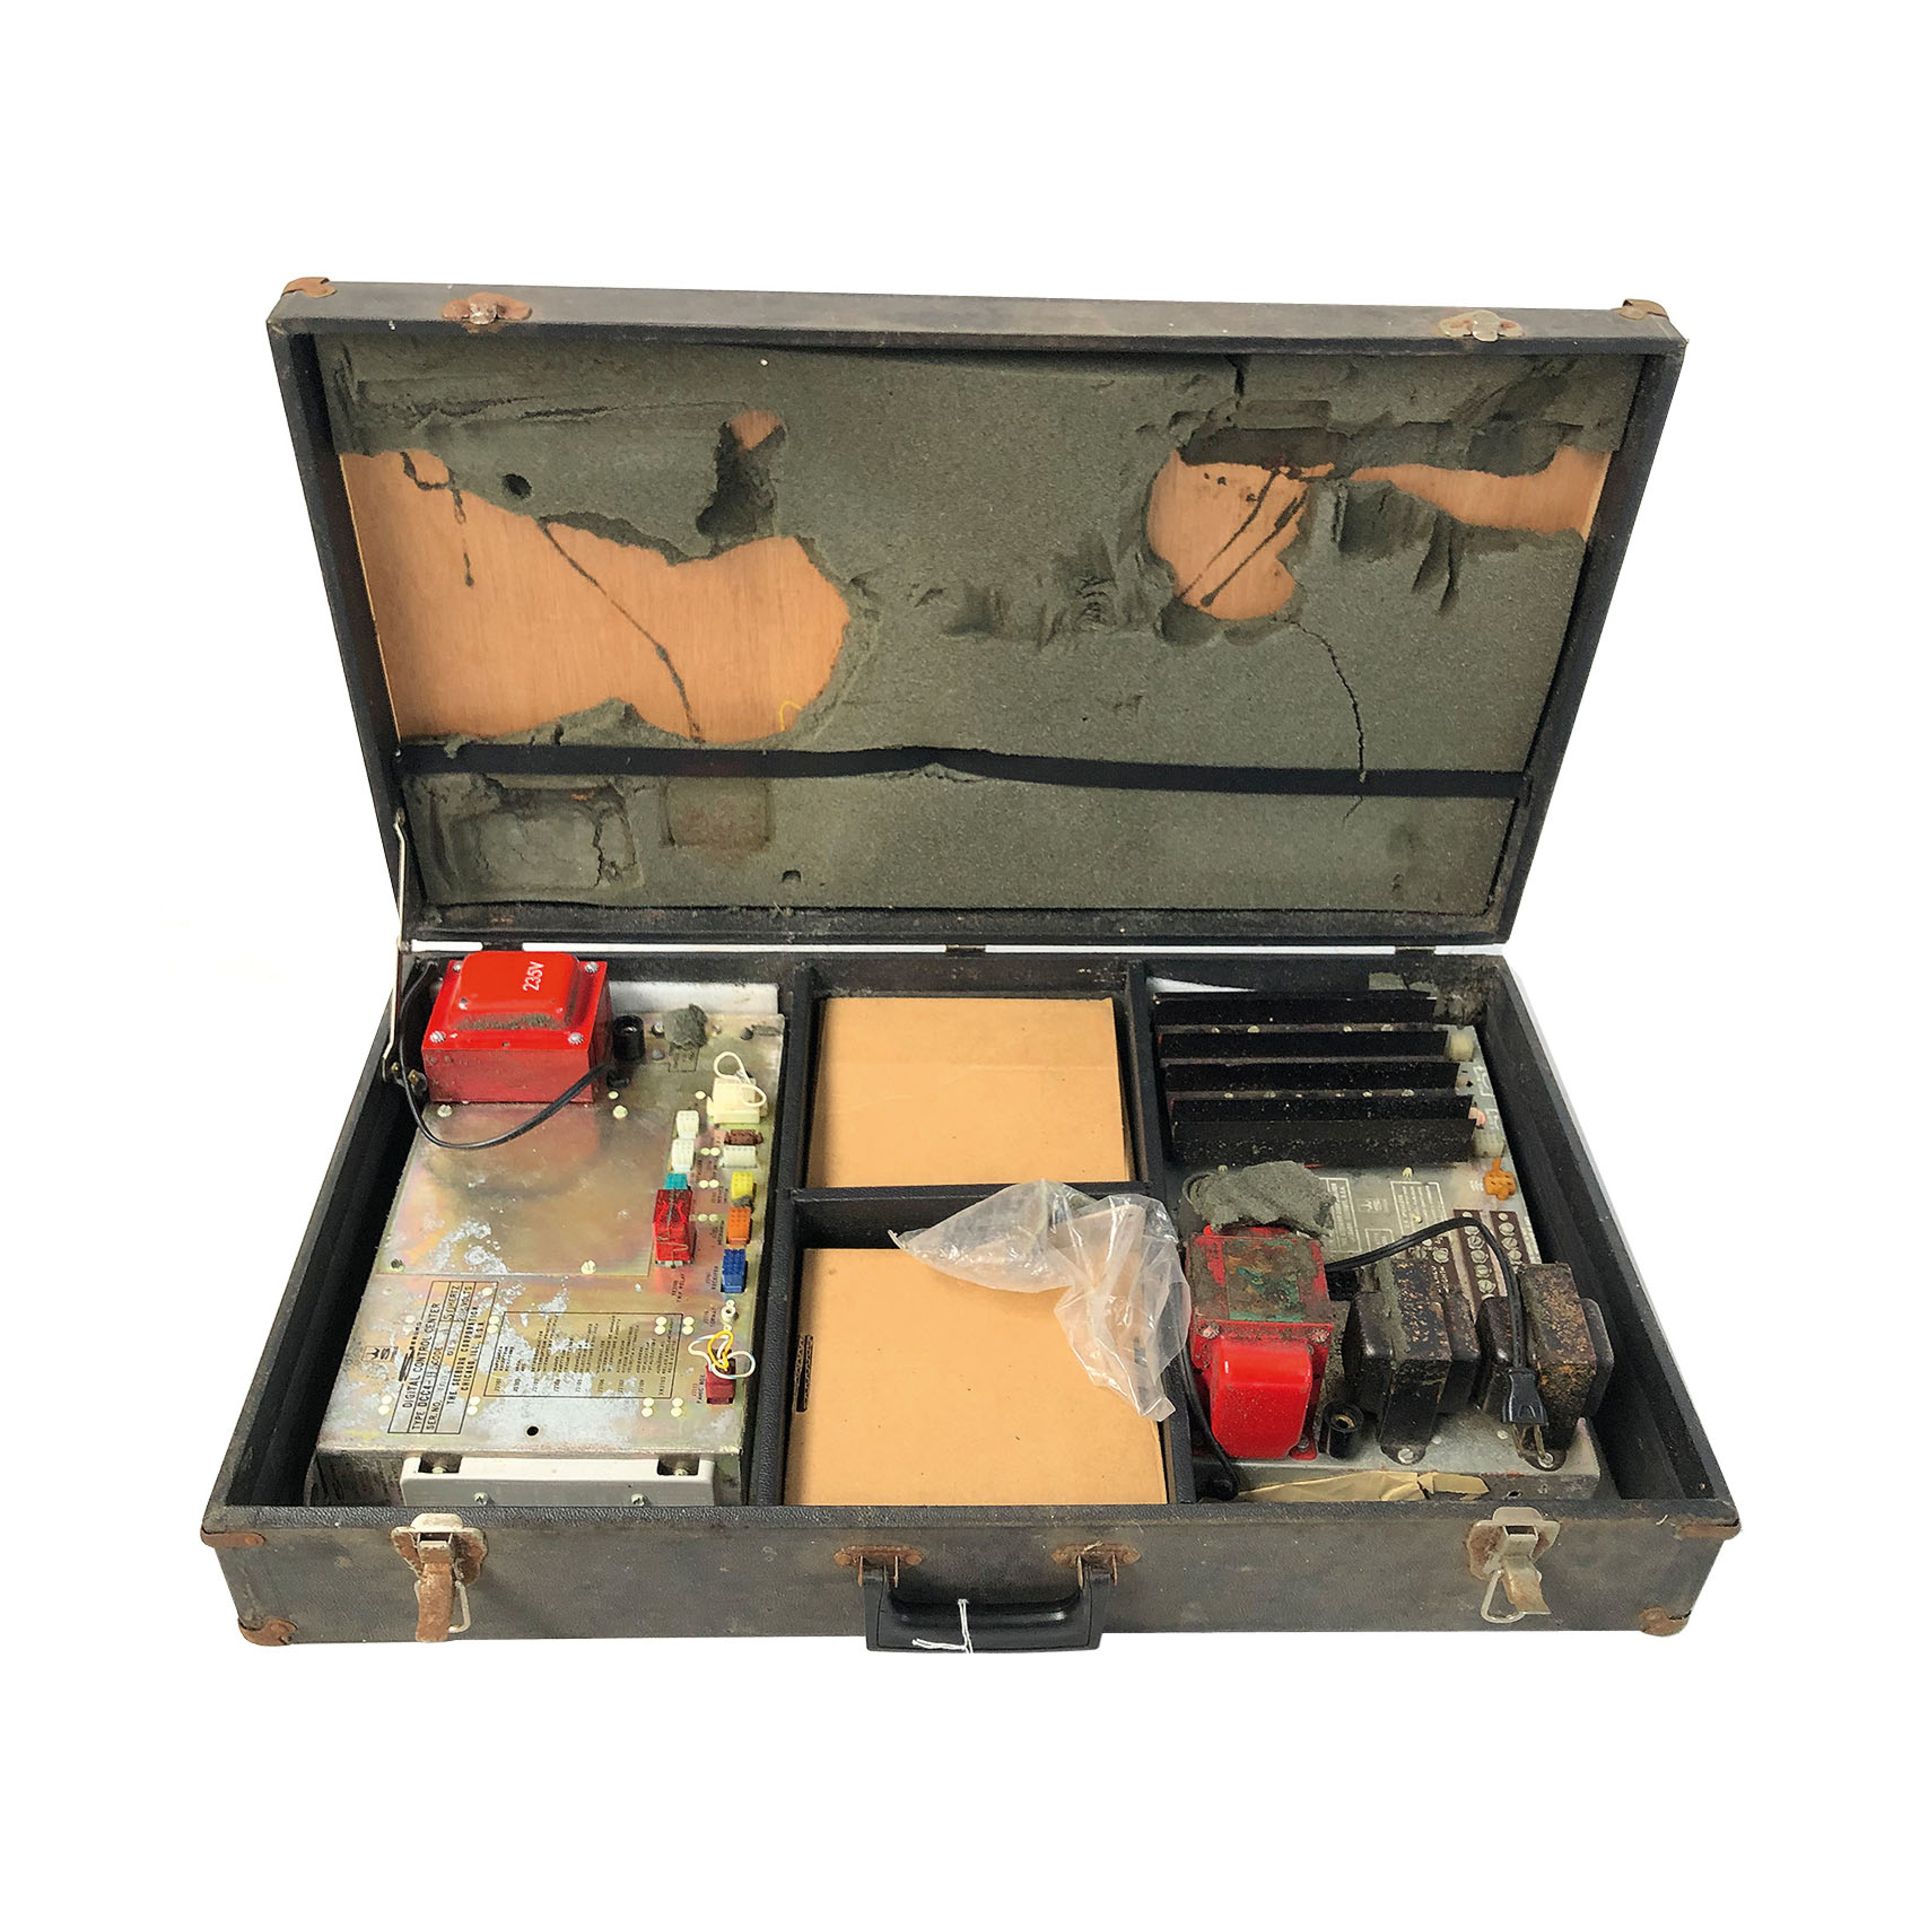 Original 1977 Seeburg Digital Electronic Serviceman's Kit